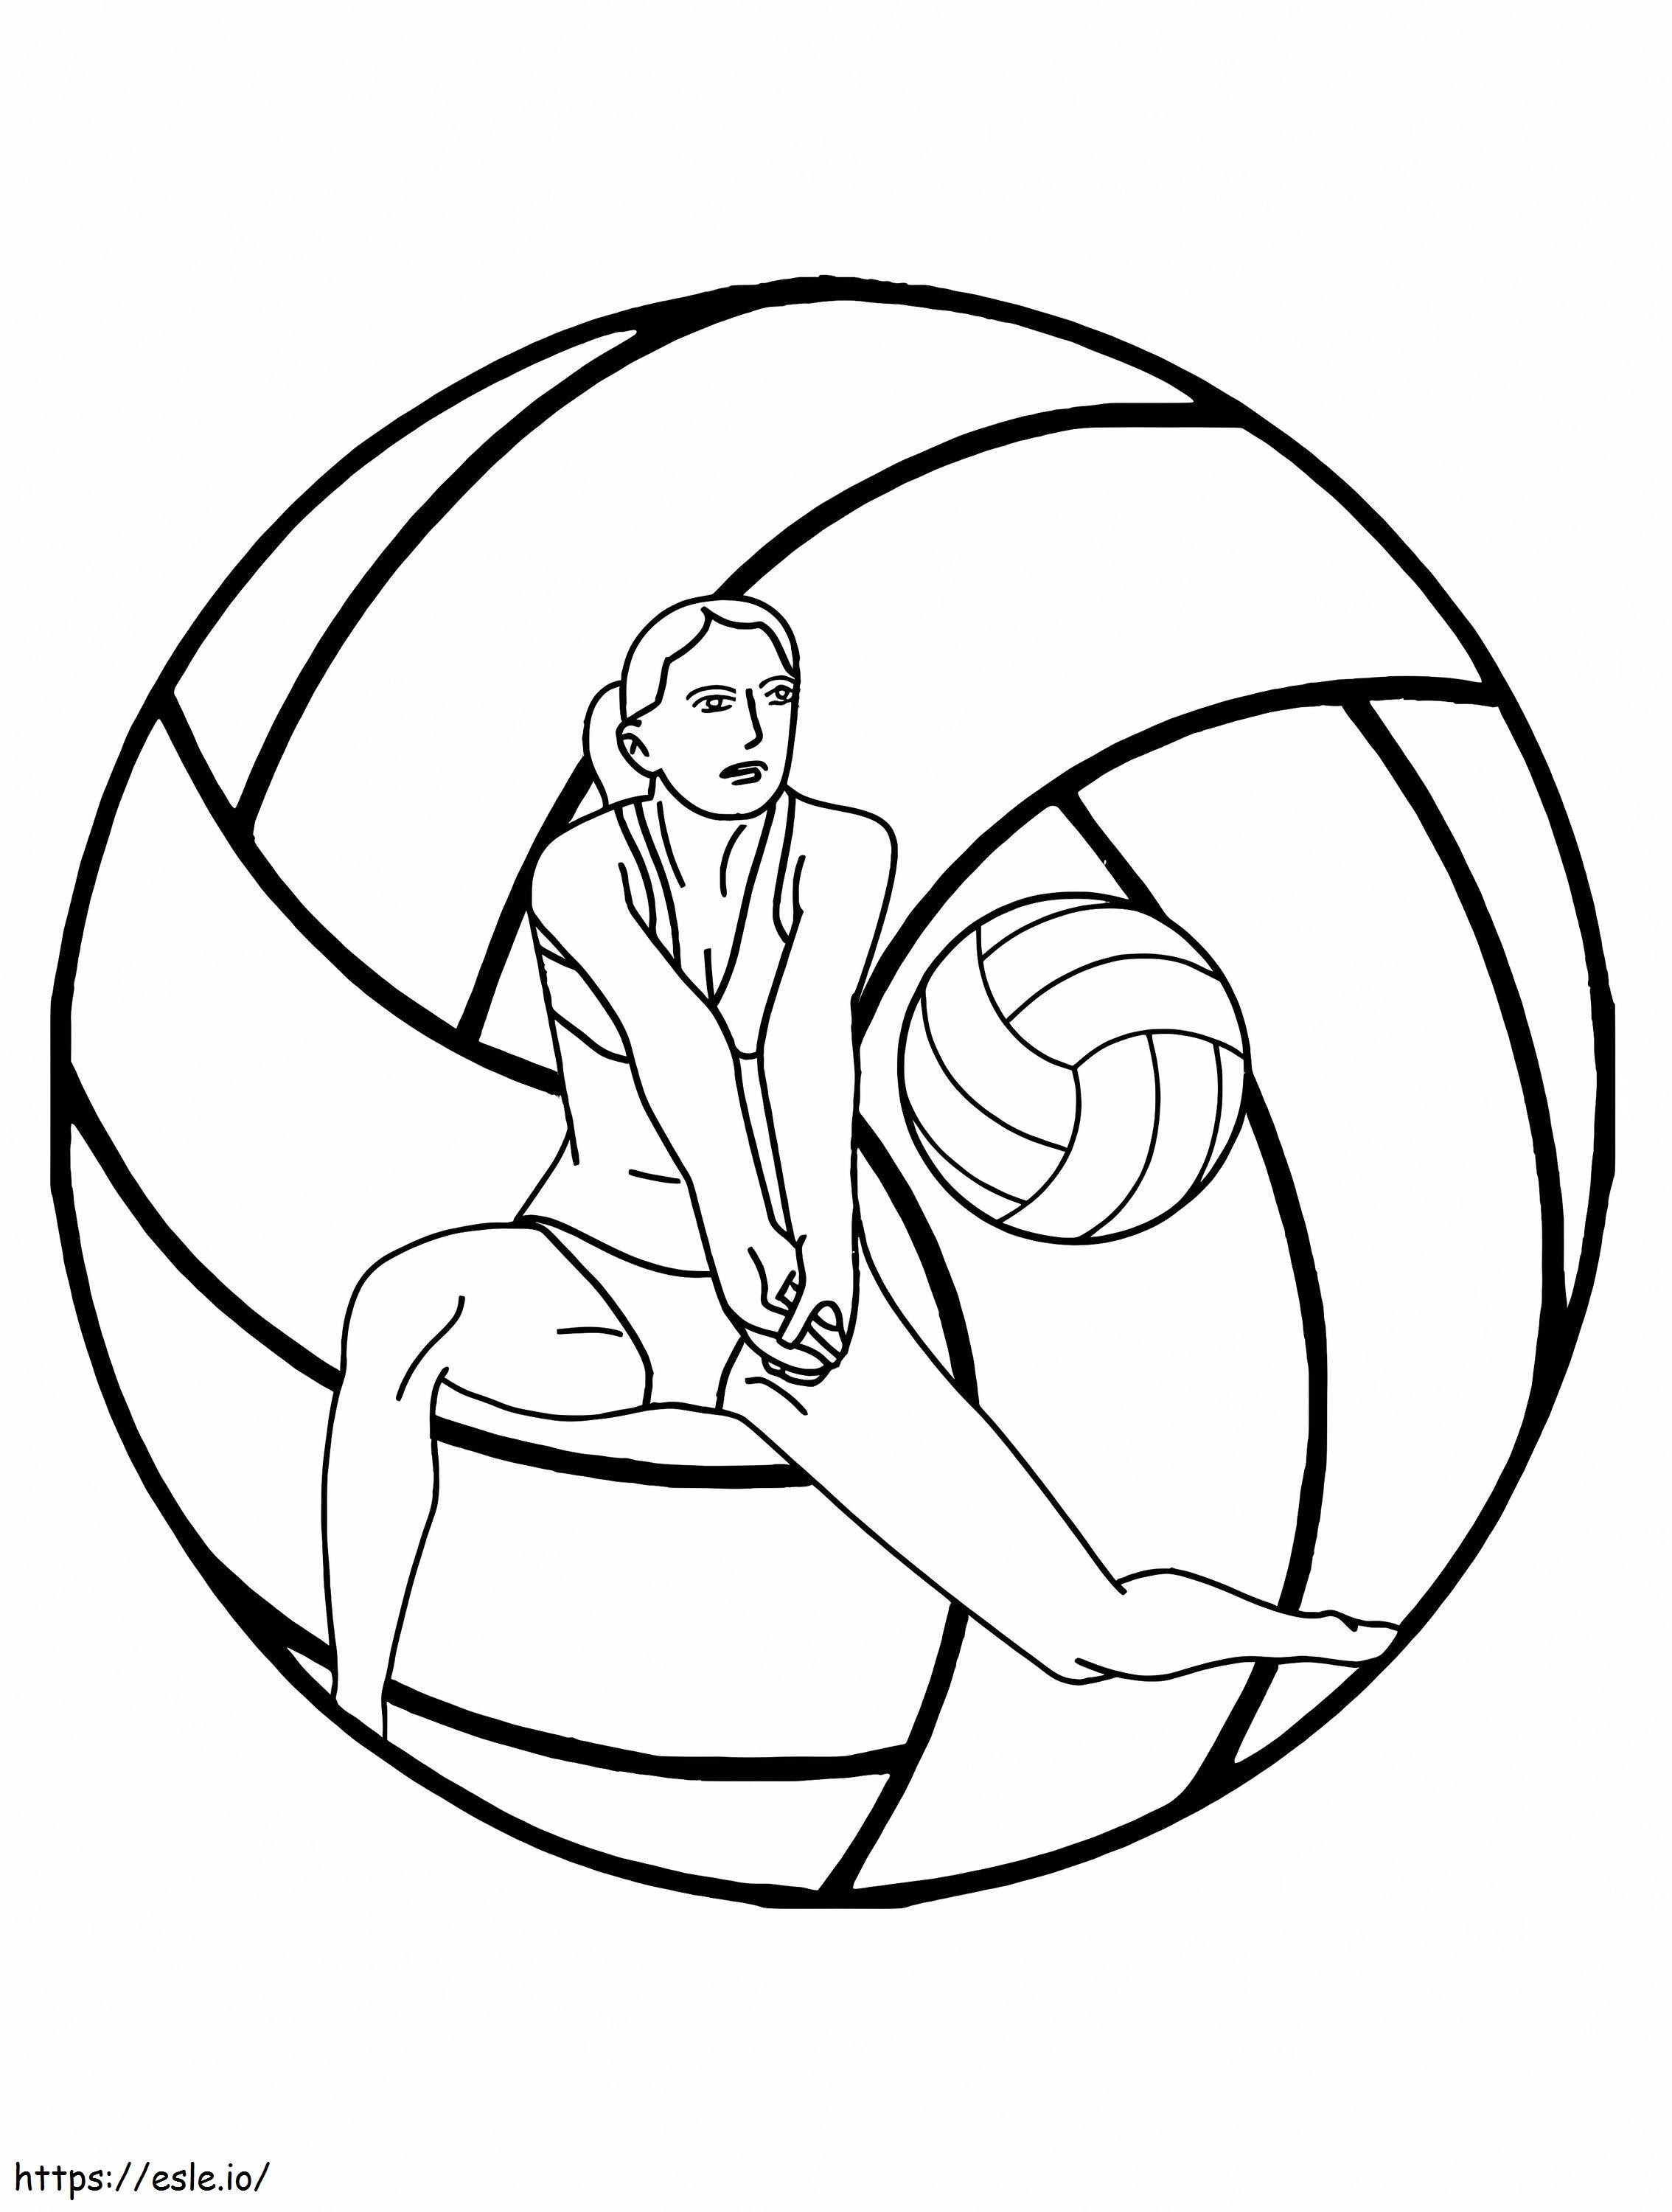 Logotipo Do Torneio De Voleibol para colorir